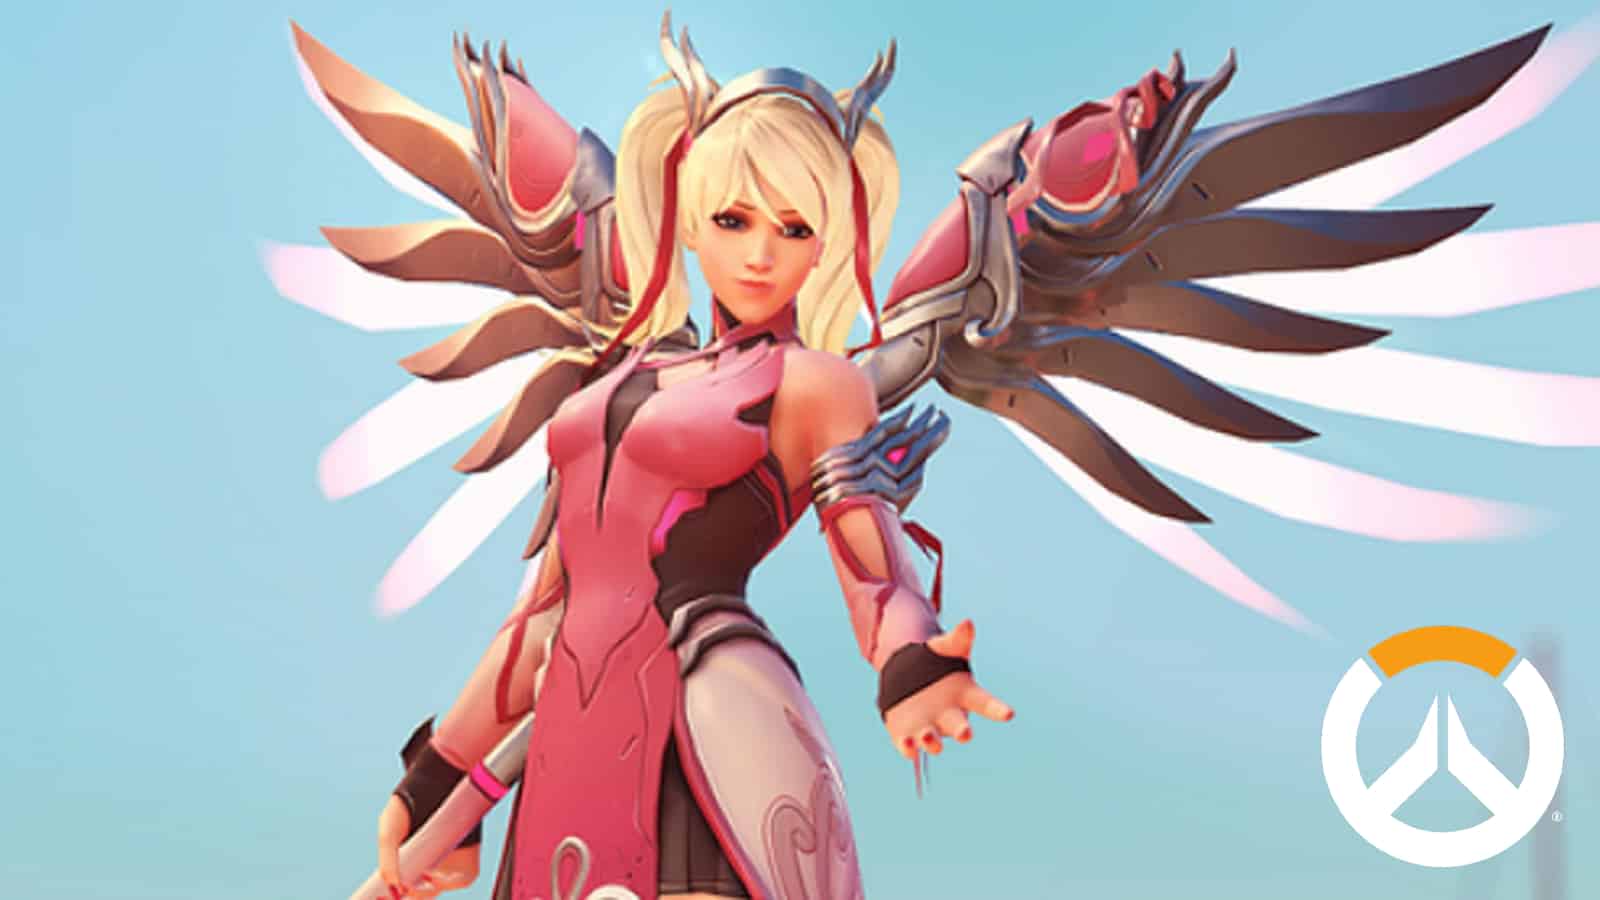 Overwatch Pink Mercy